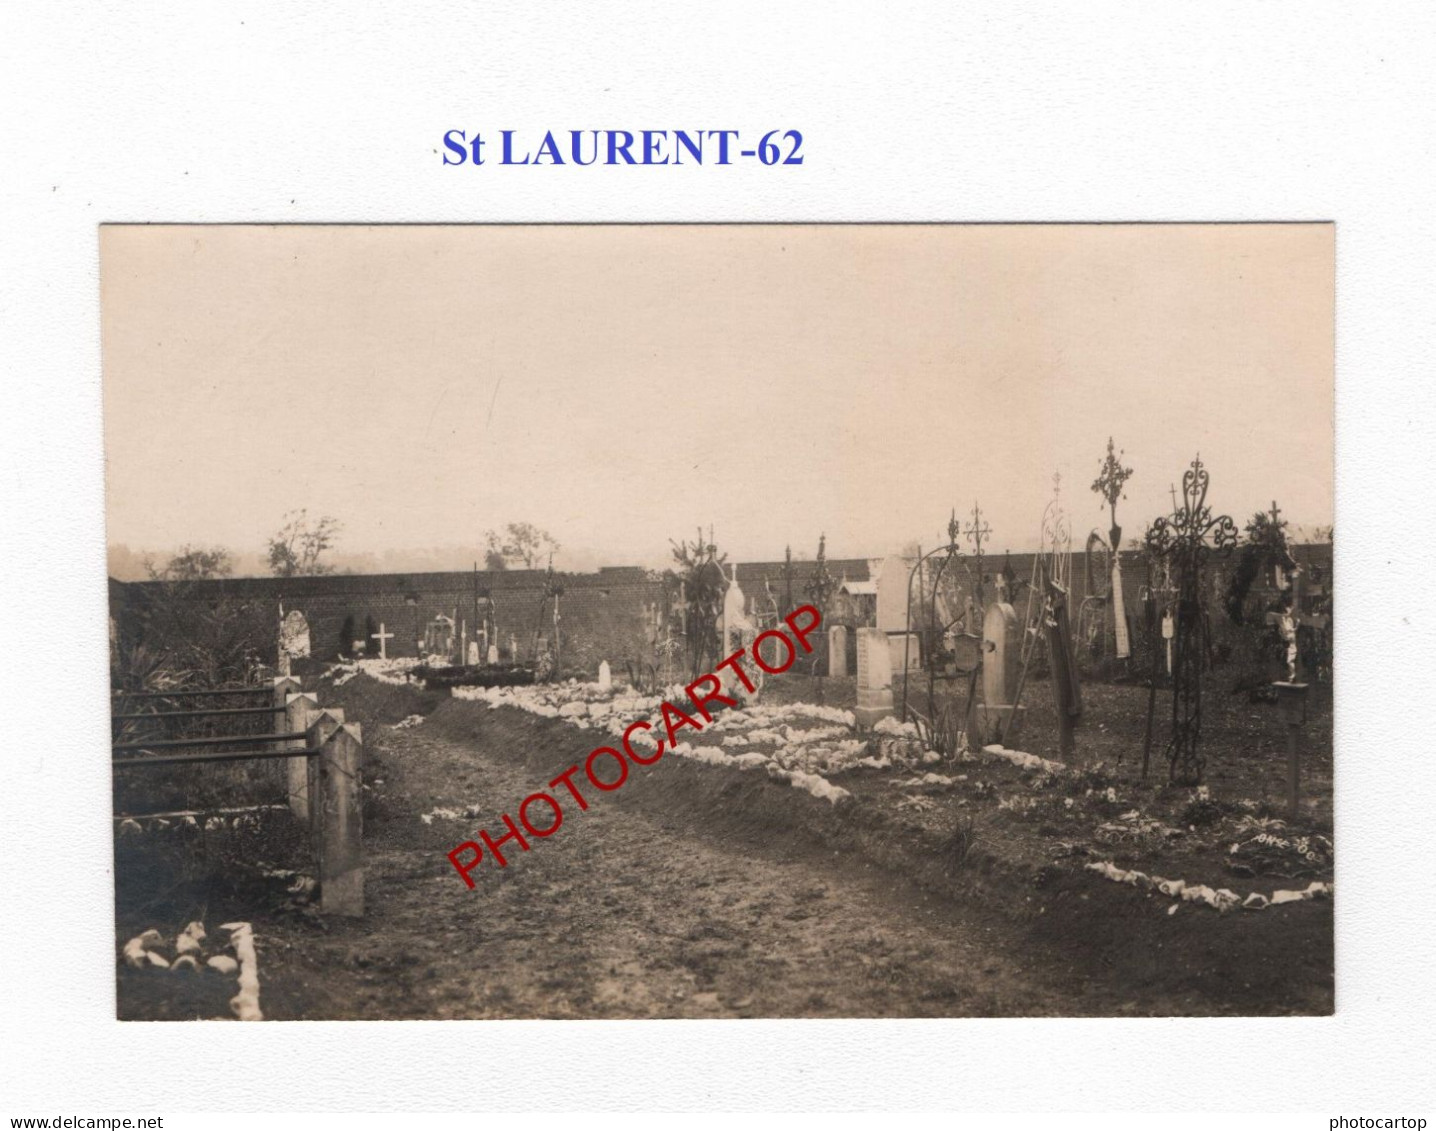 St LAURENT-62-Cimetiere-Tombes-CARTE PHOTO Allemande-GUERRE 14-18-1 WK-MILITARIA- - Soldatenfriedhöfen